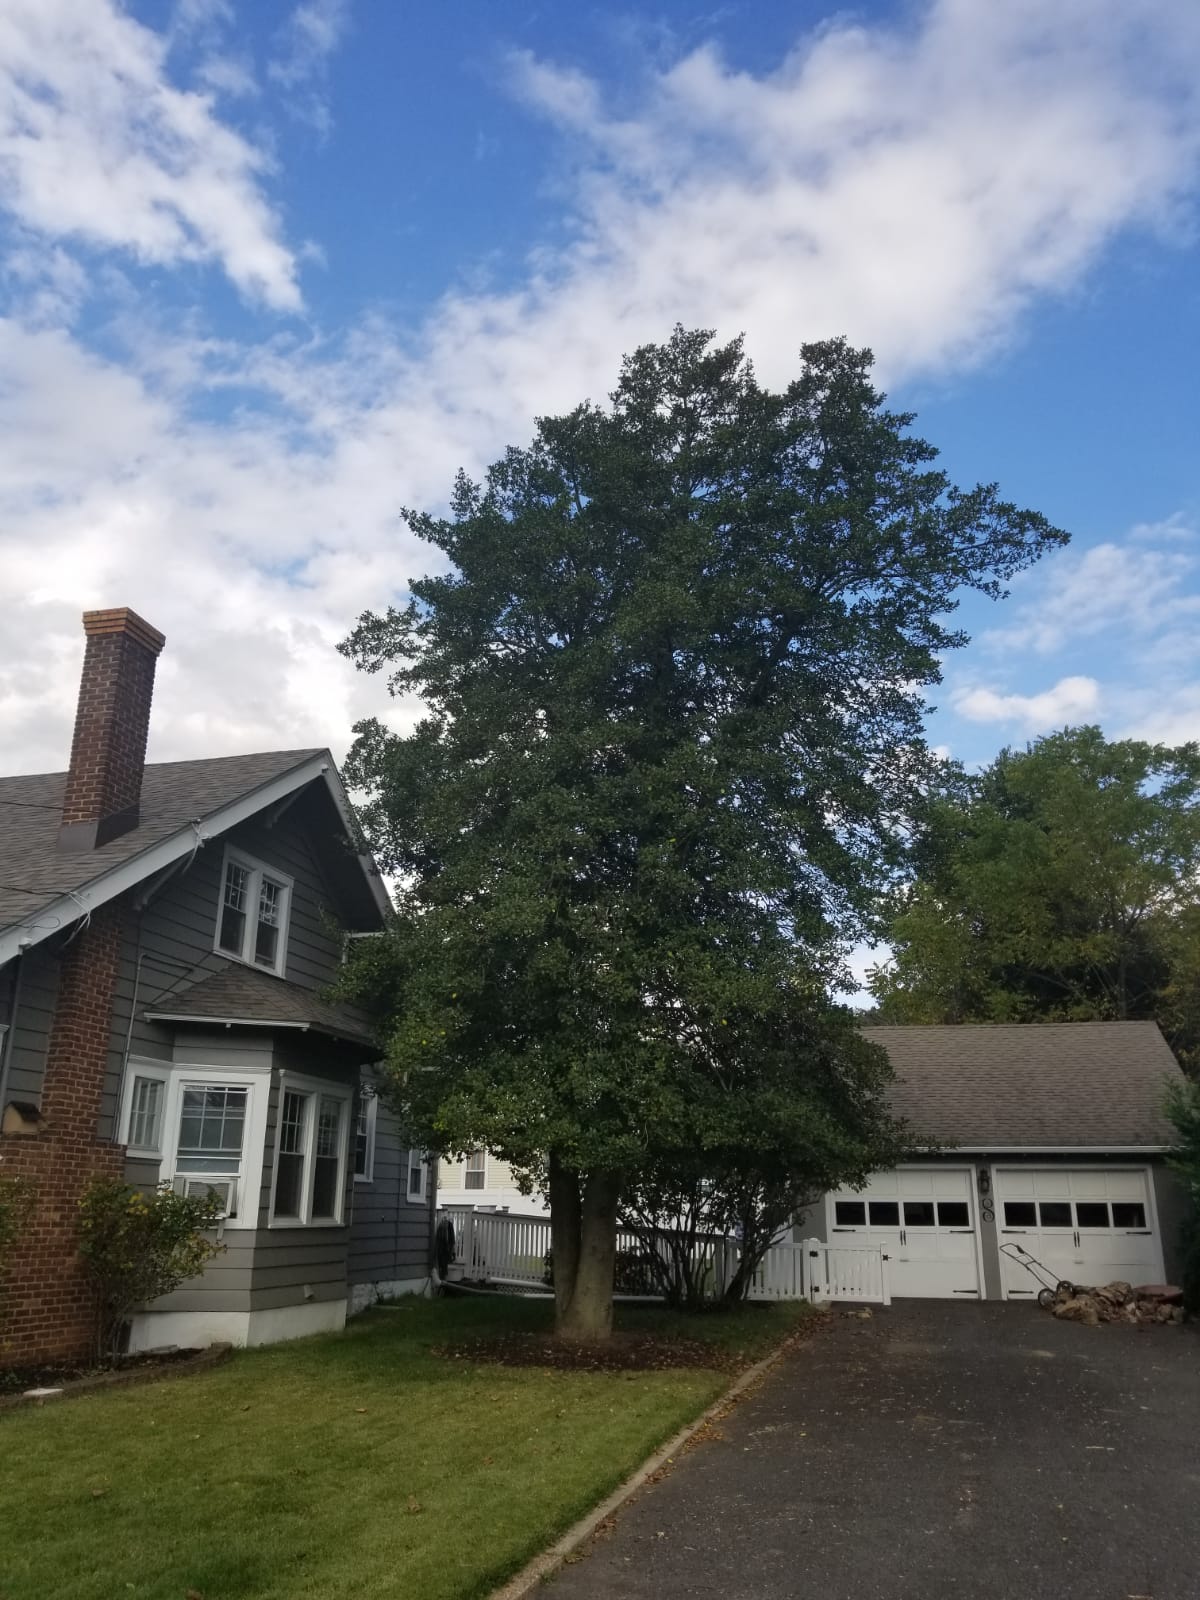 Tree Pruning in East Brunswick,NJ